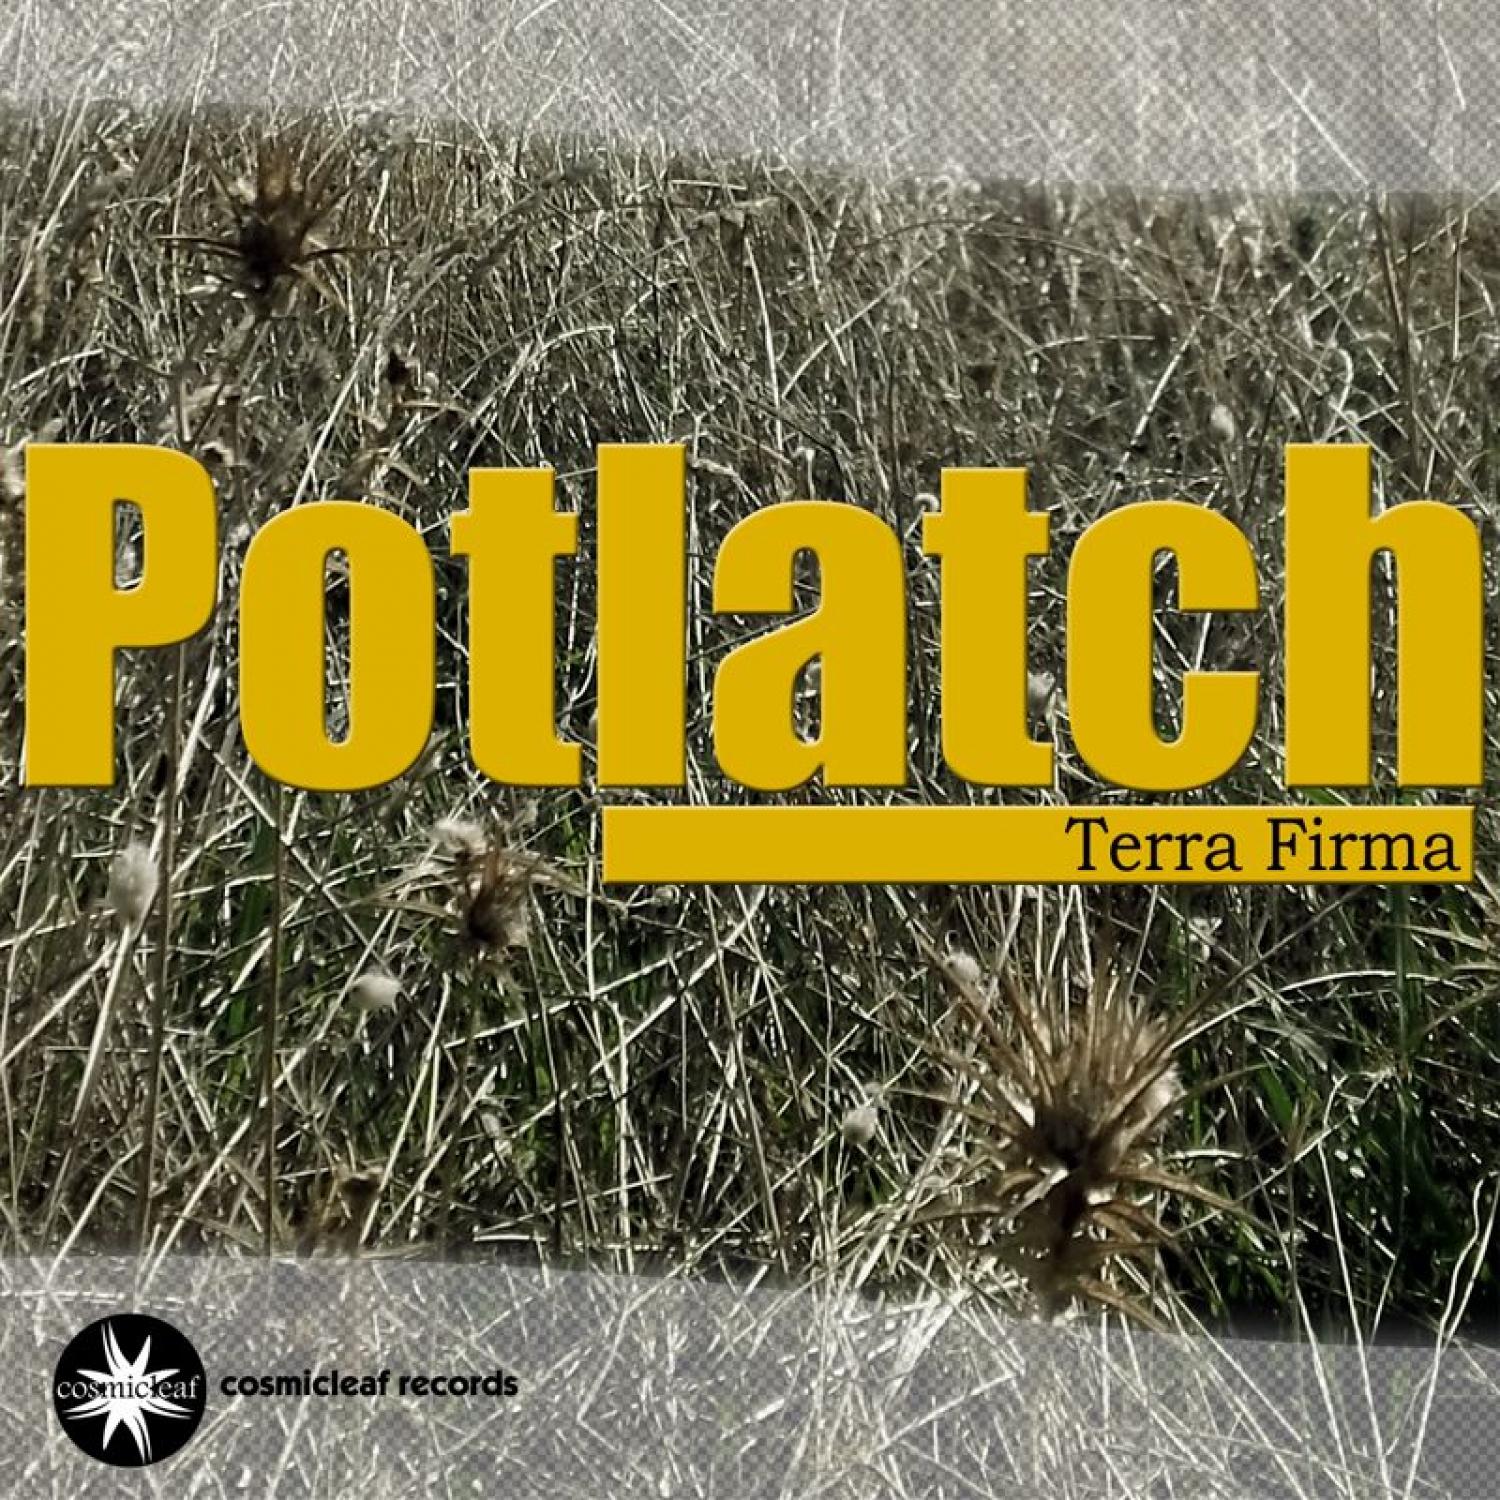 Potlatch - Sleep At the Swamp